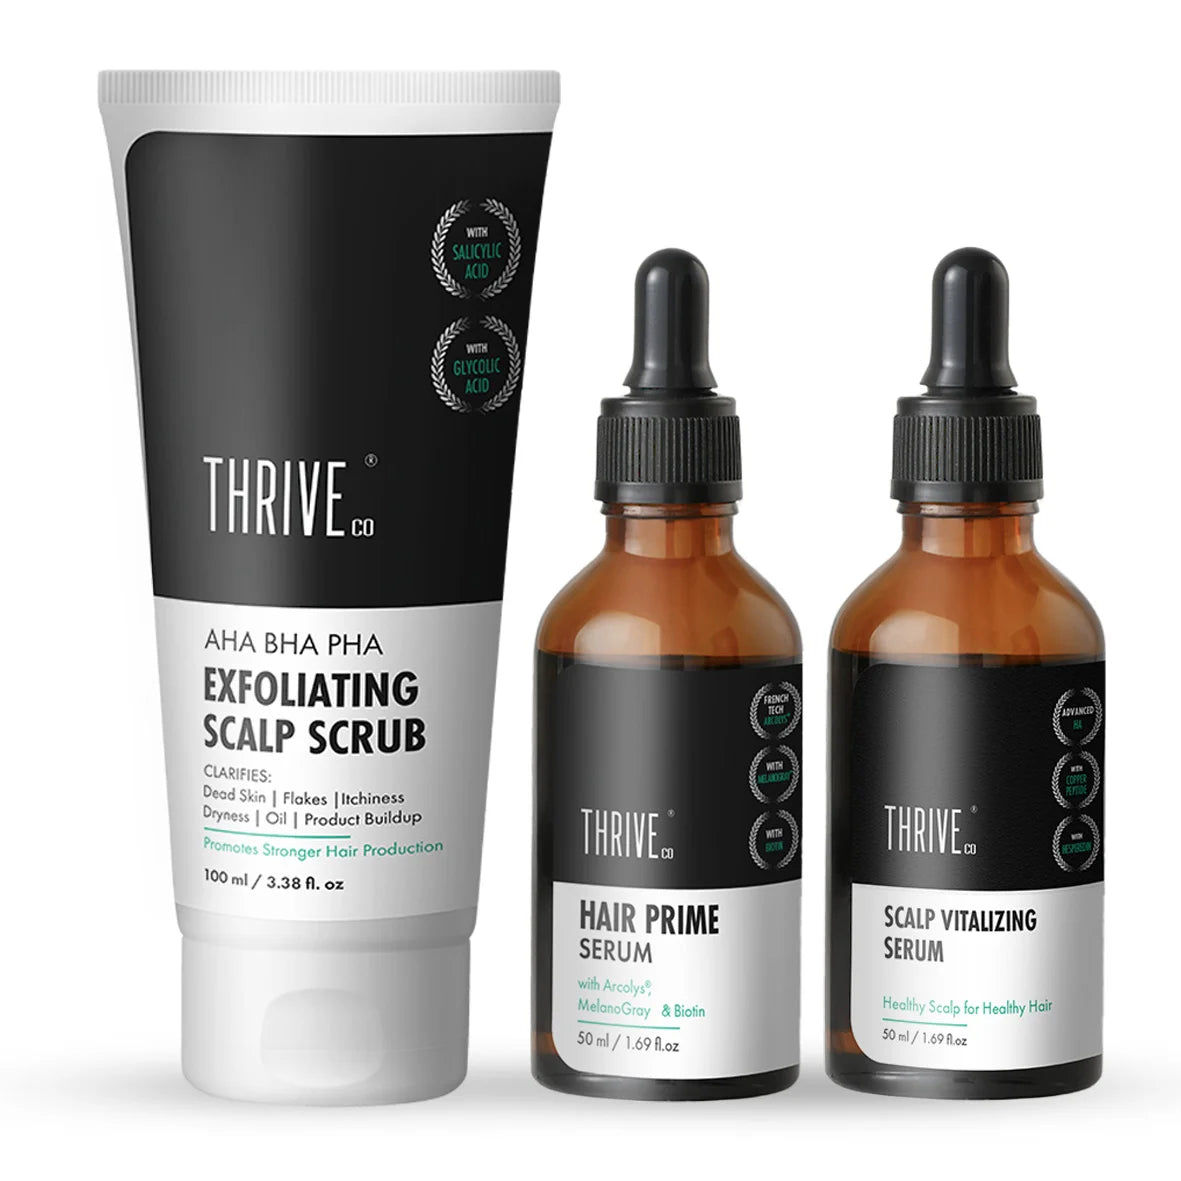 ThriveCo Hair Prime Serum ThriveCo Scalp Exfoliating Scrub ThriveCo Scalp Vitalizing Serum